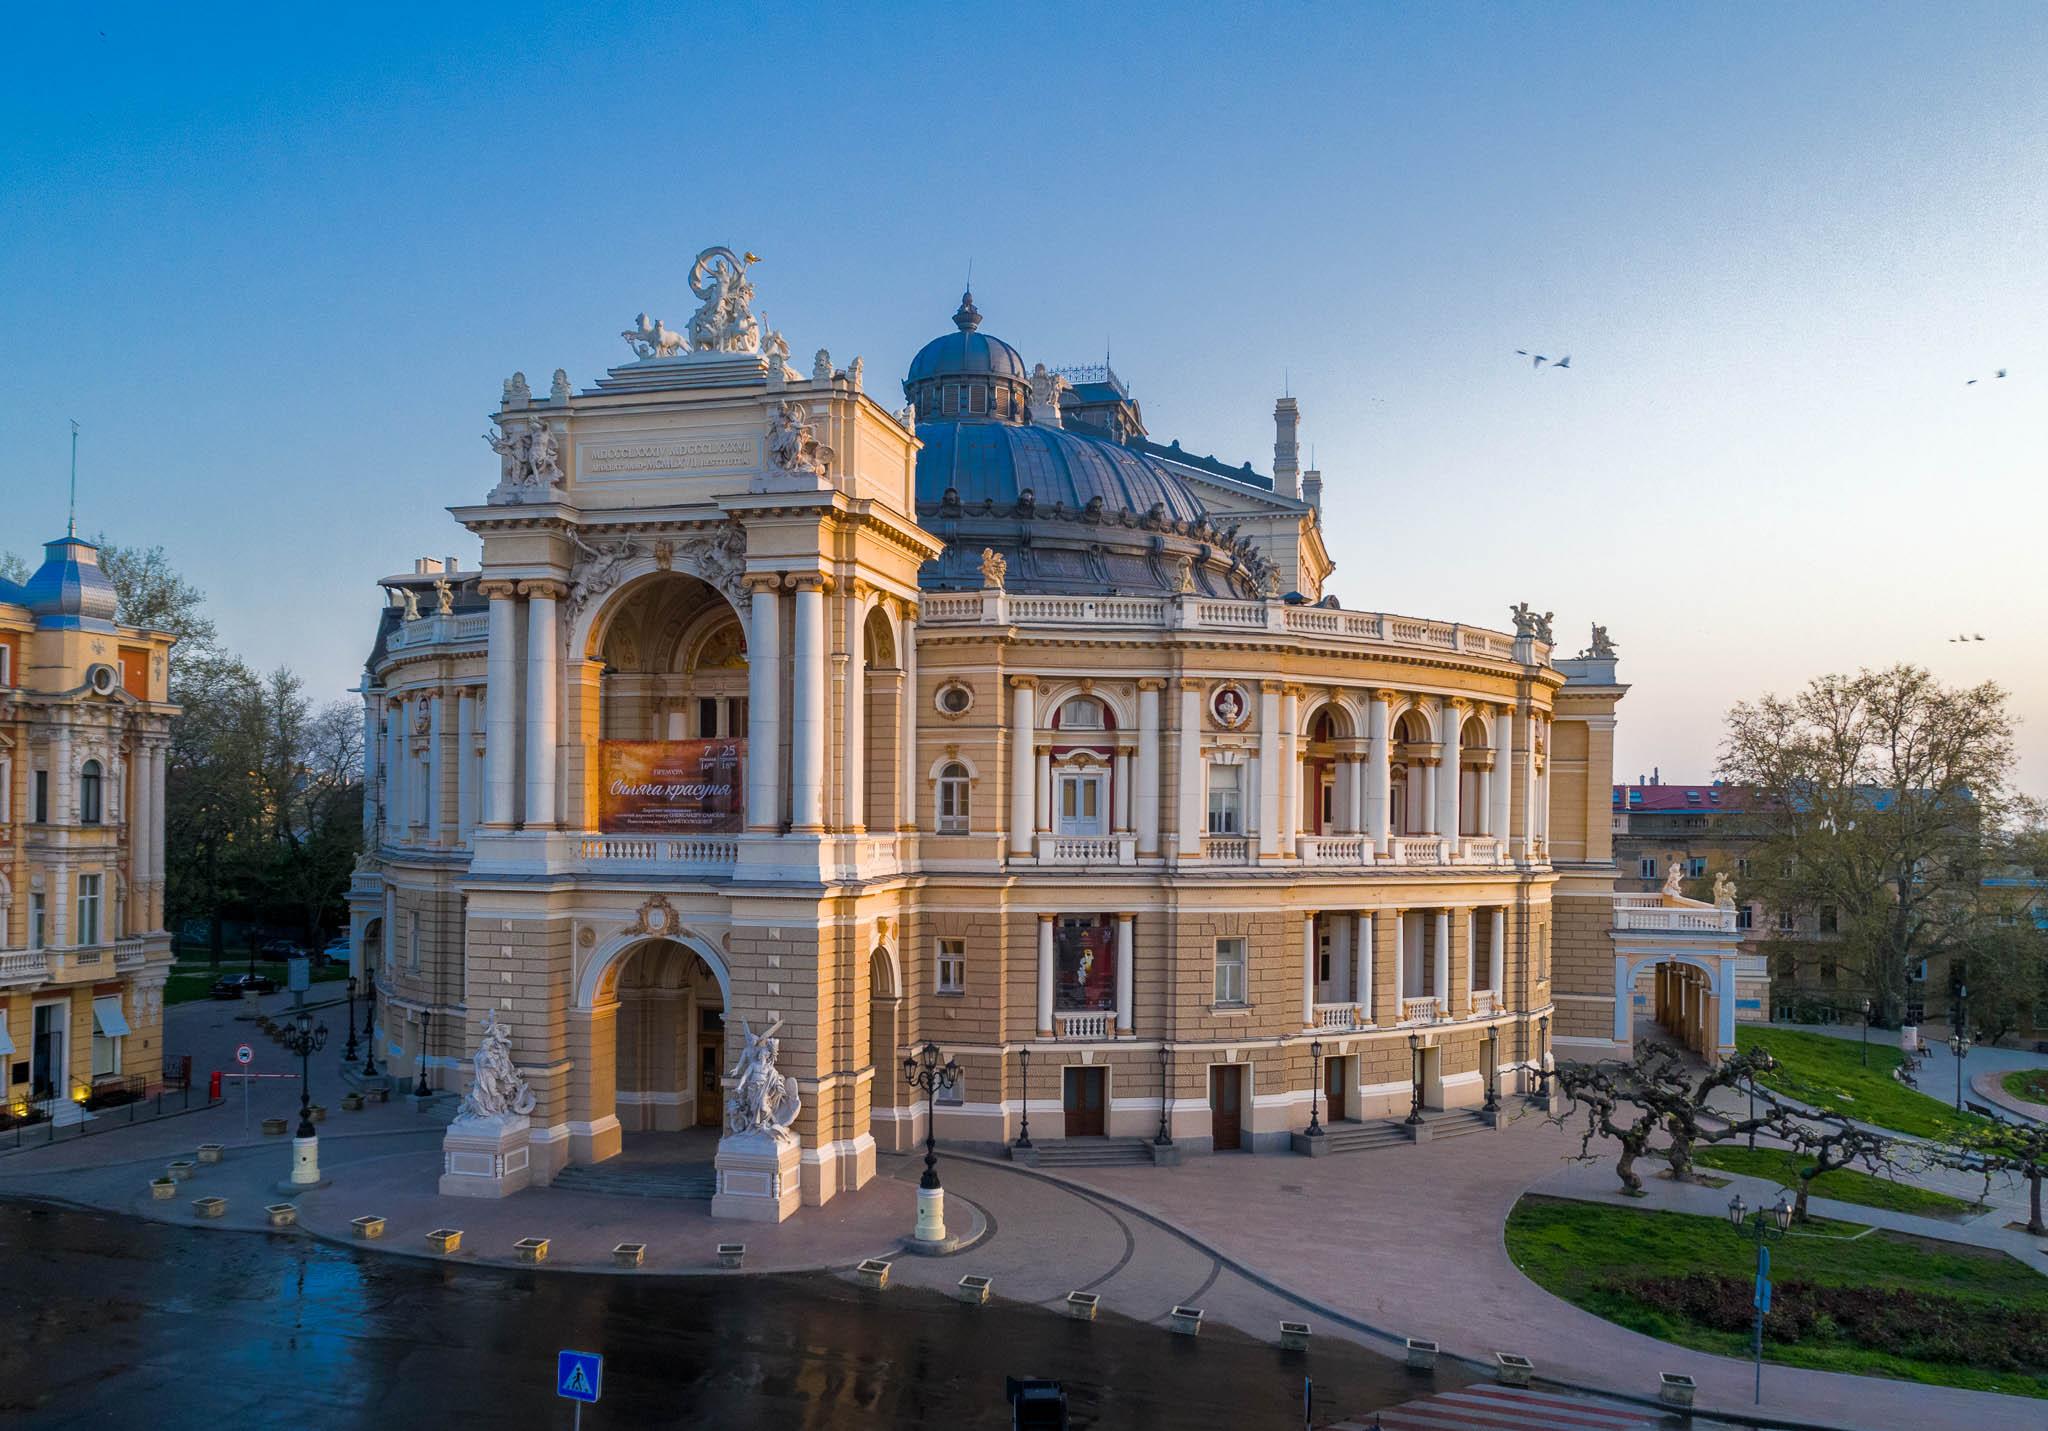 Odesa Opera Theatre in Ukraine shot from a drone